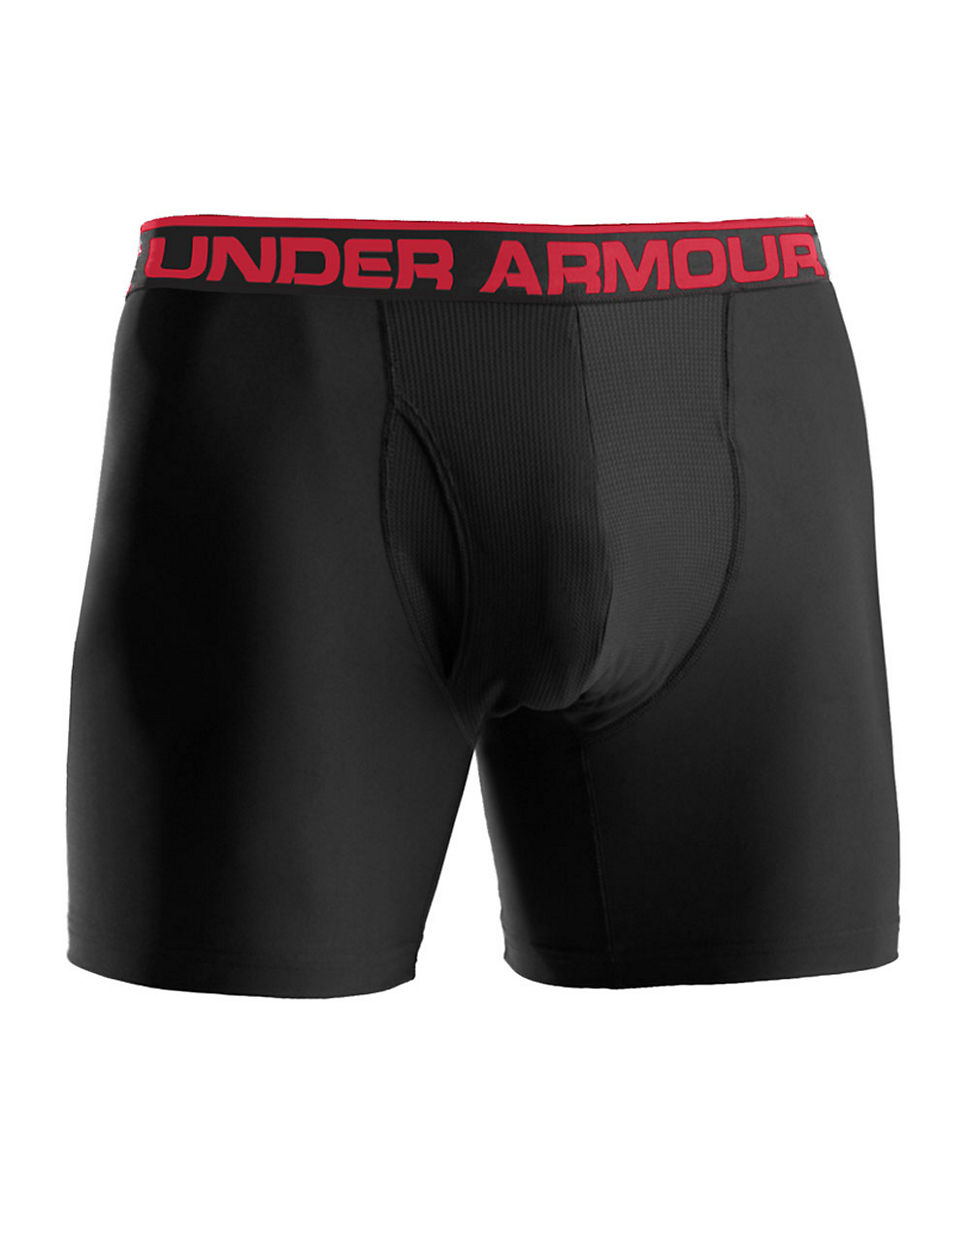 Under Armour Original Boxerjock Inch Boxer Briefs In Black For Men Lyst